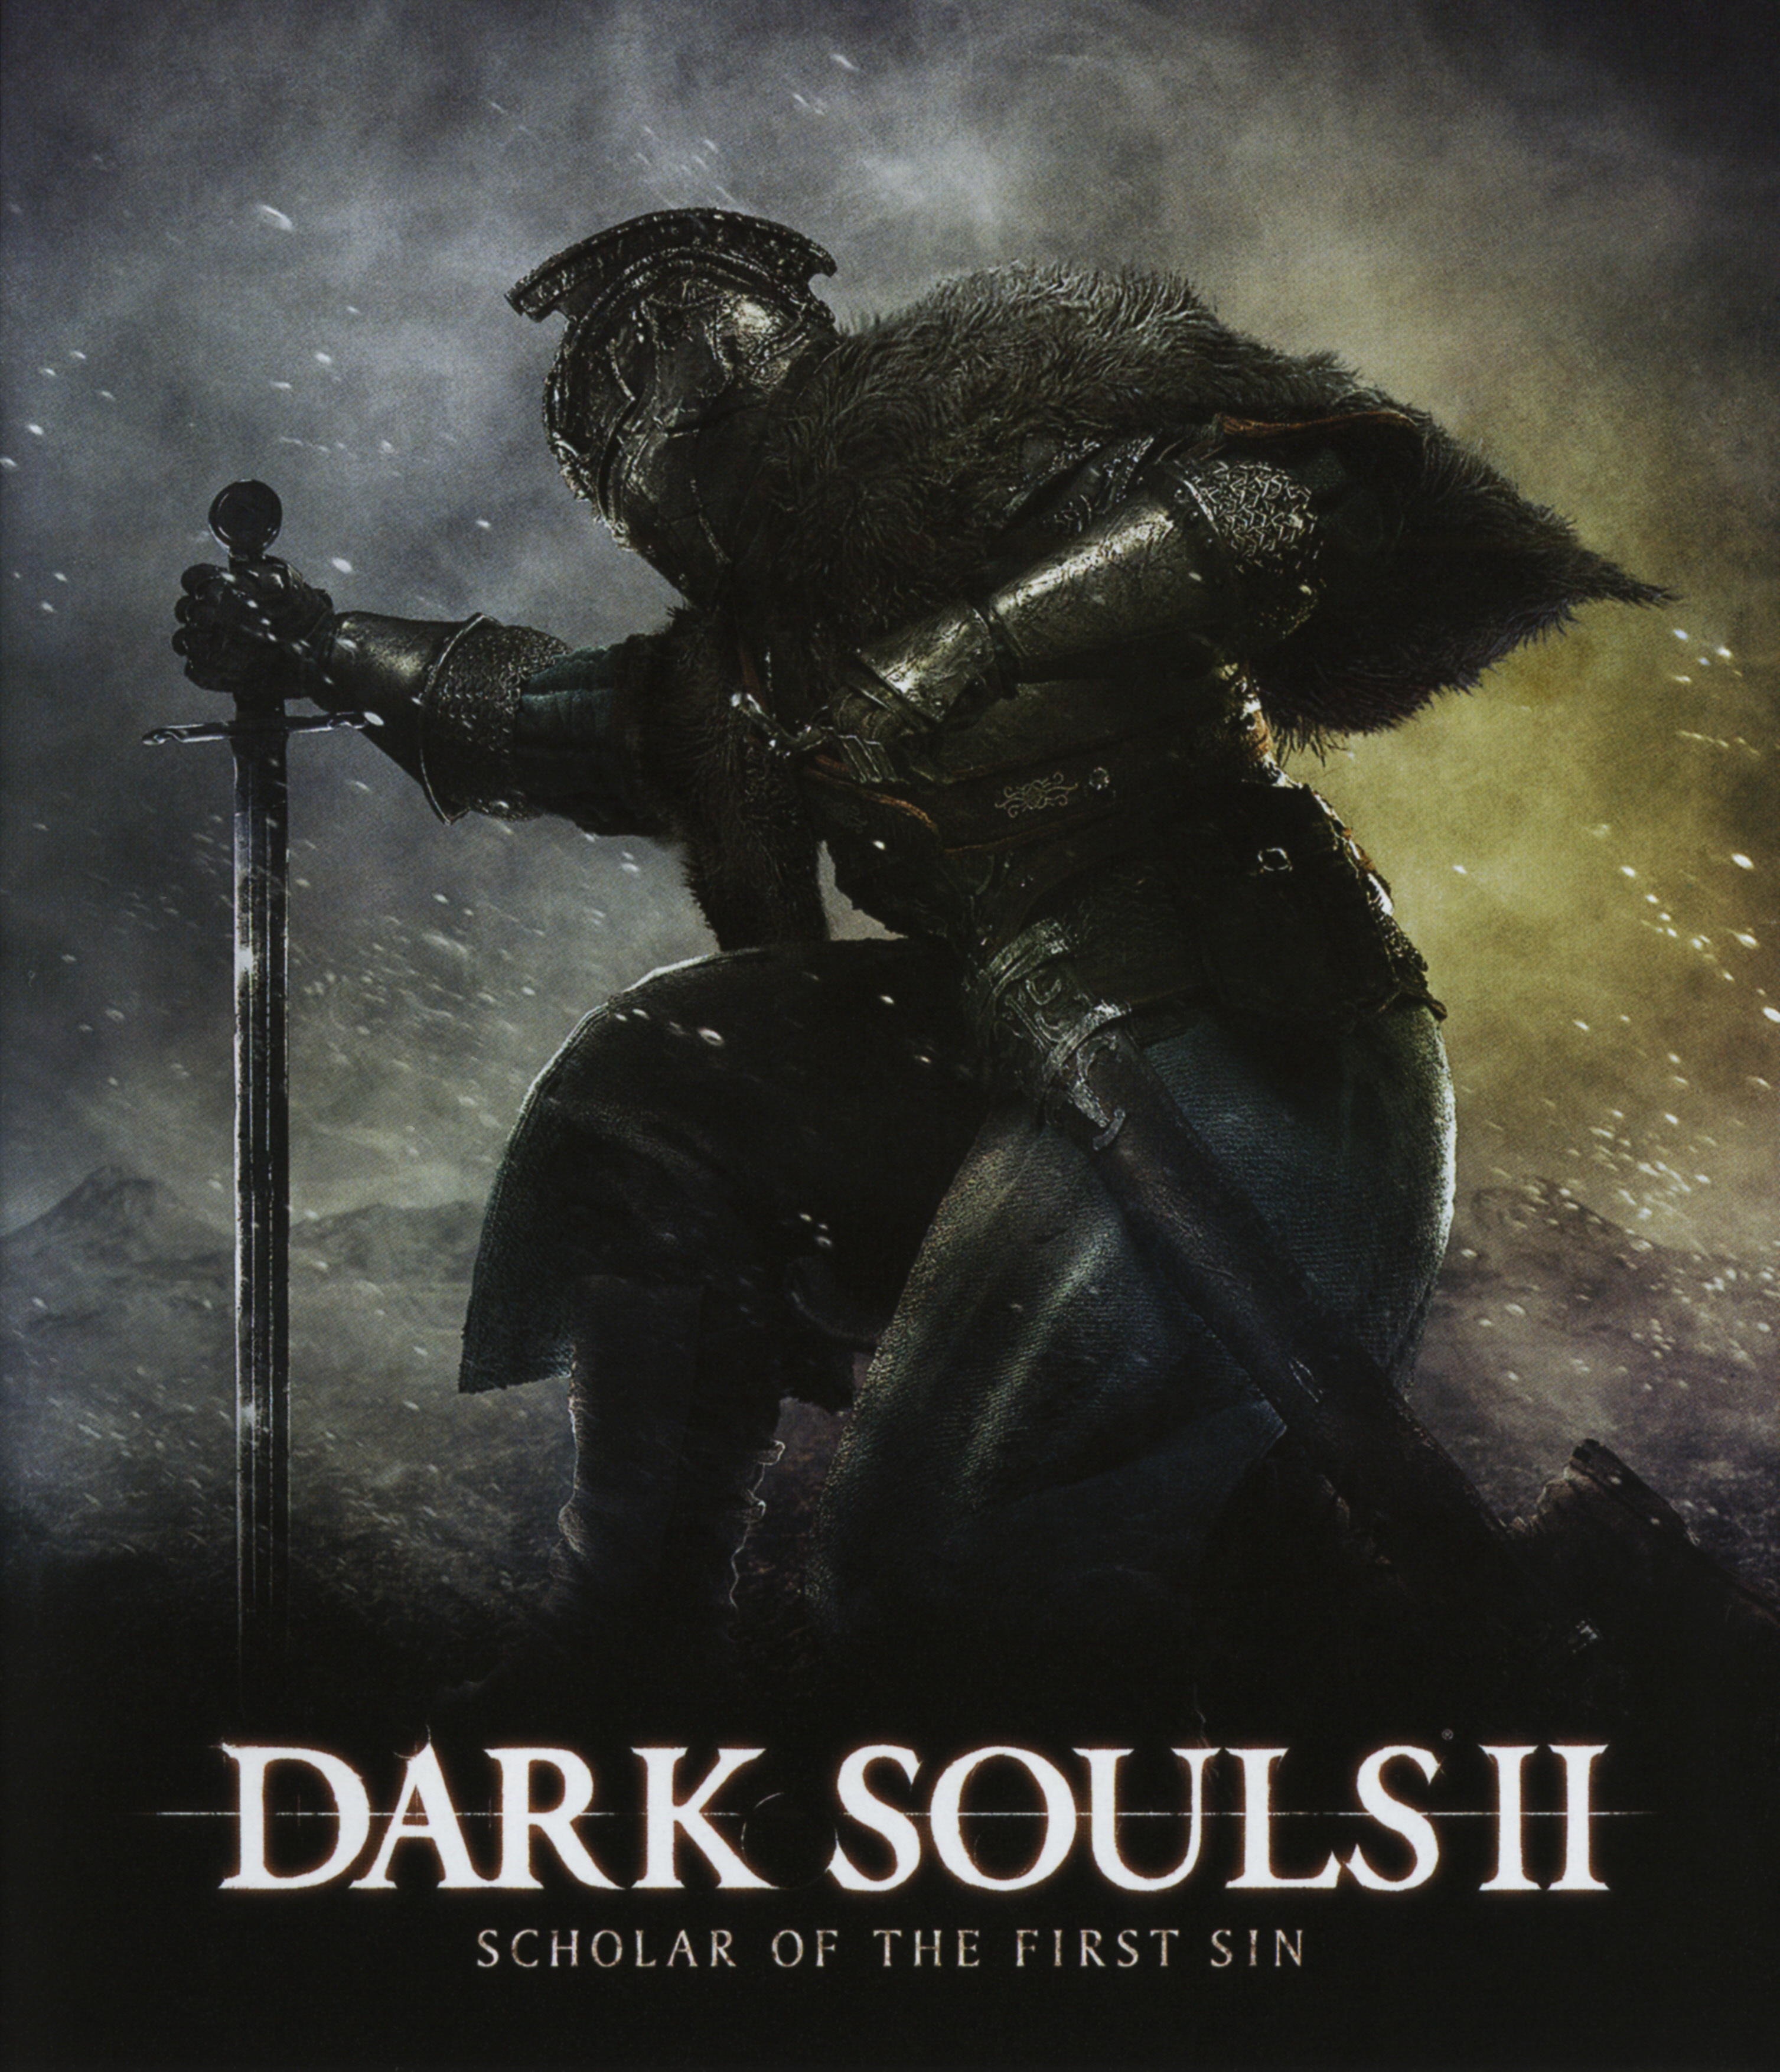 Dark Souls 2 (Original Game Soundtrack) by Motoi Sakuraba/Yuka